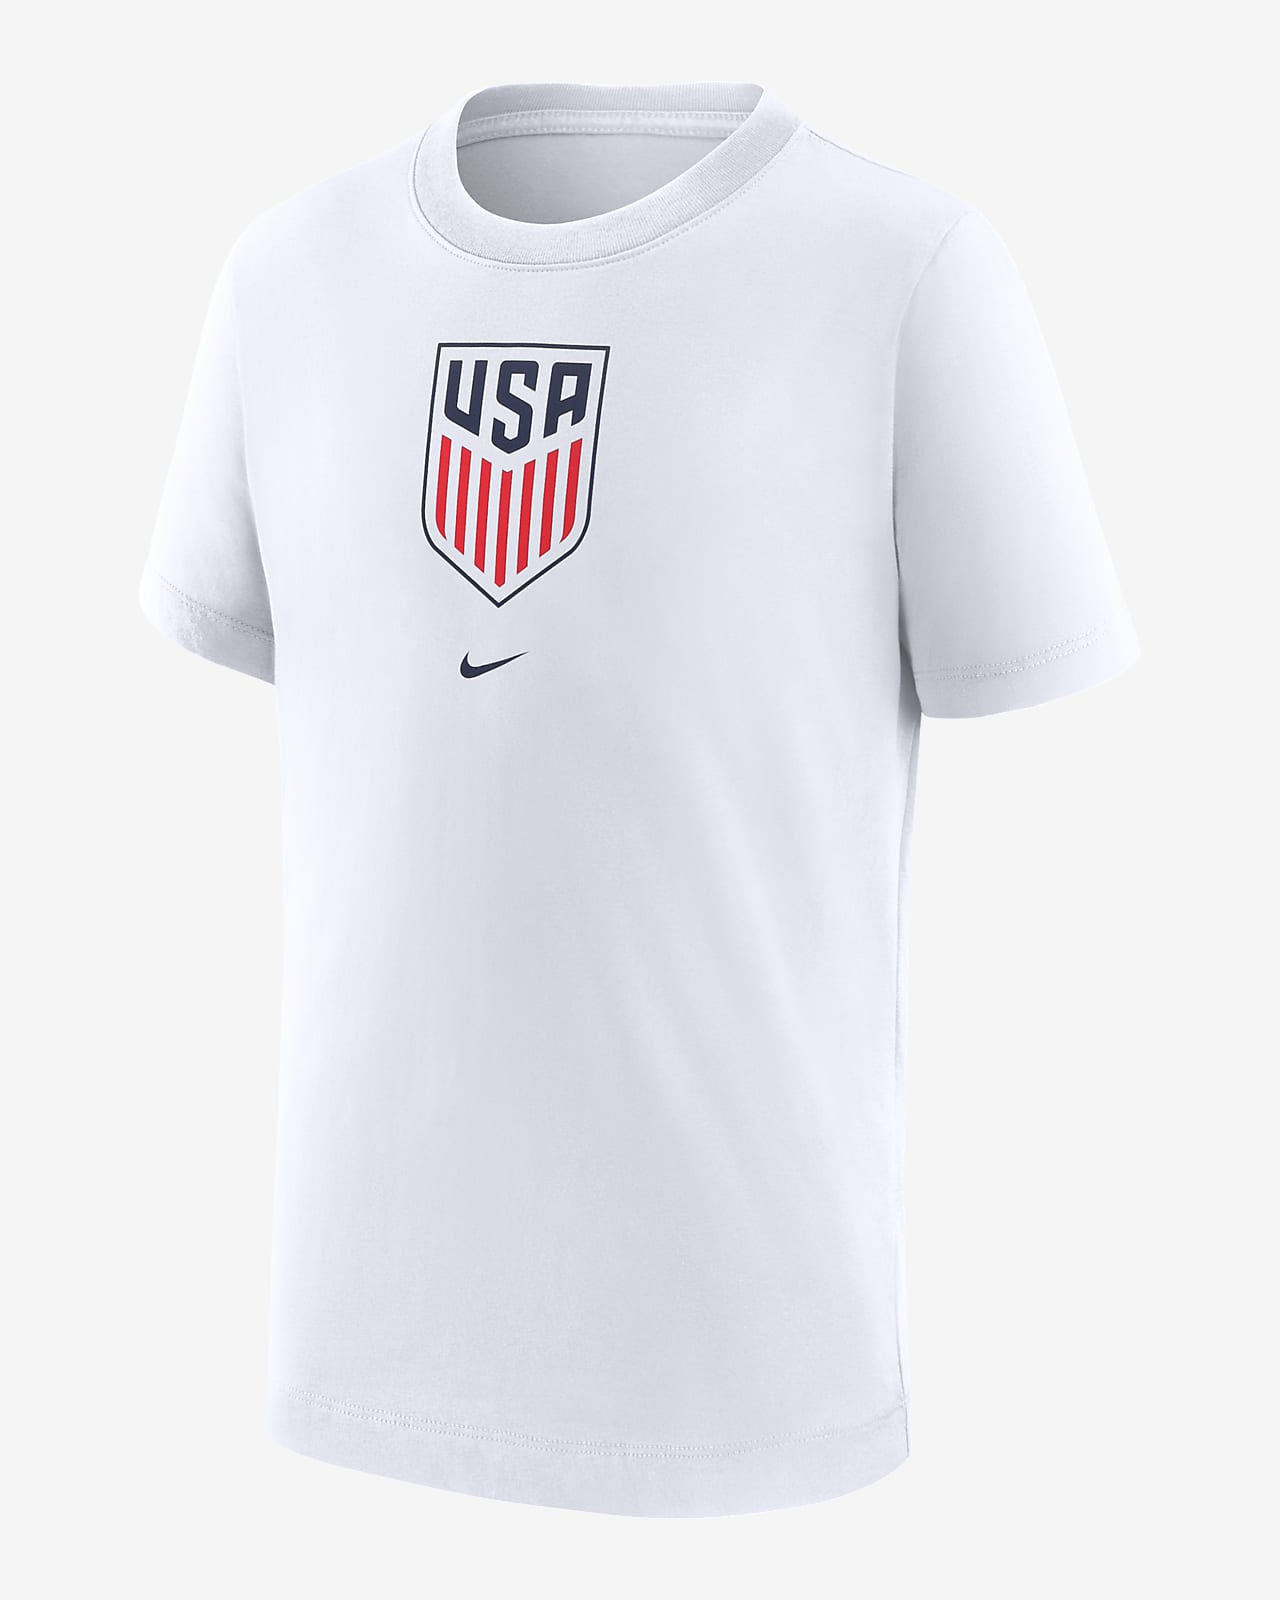 U.S. Big Kids' Nike T-Shirt